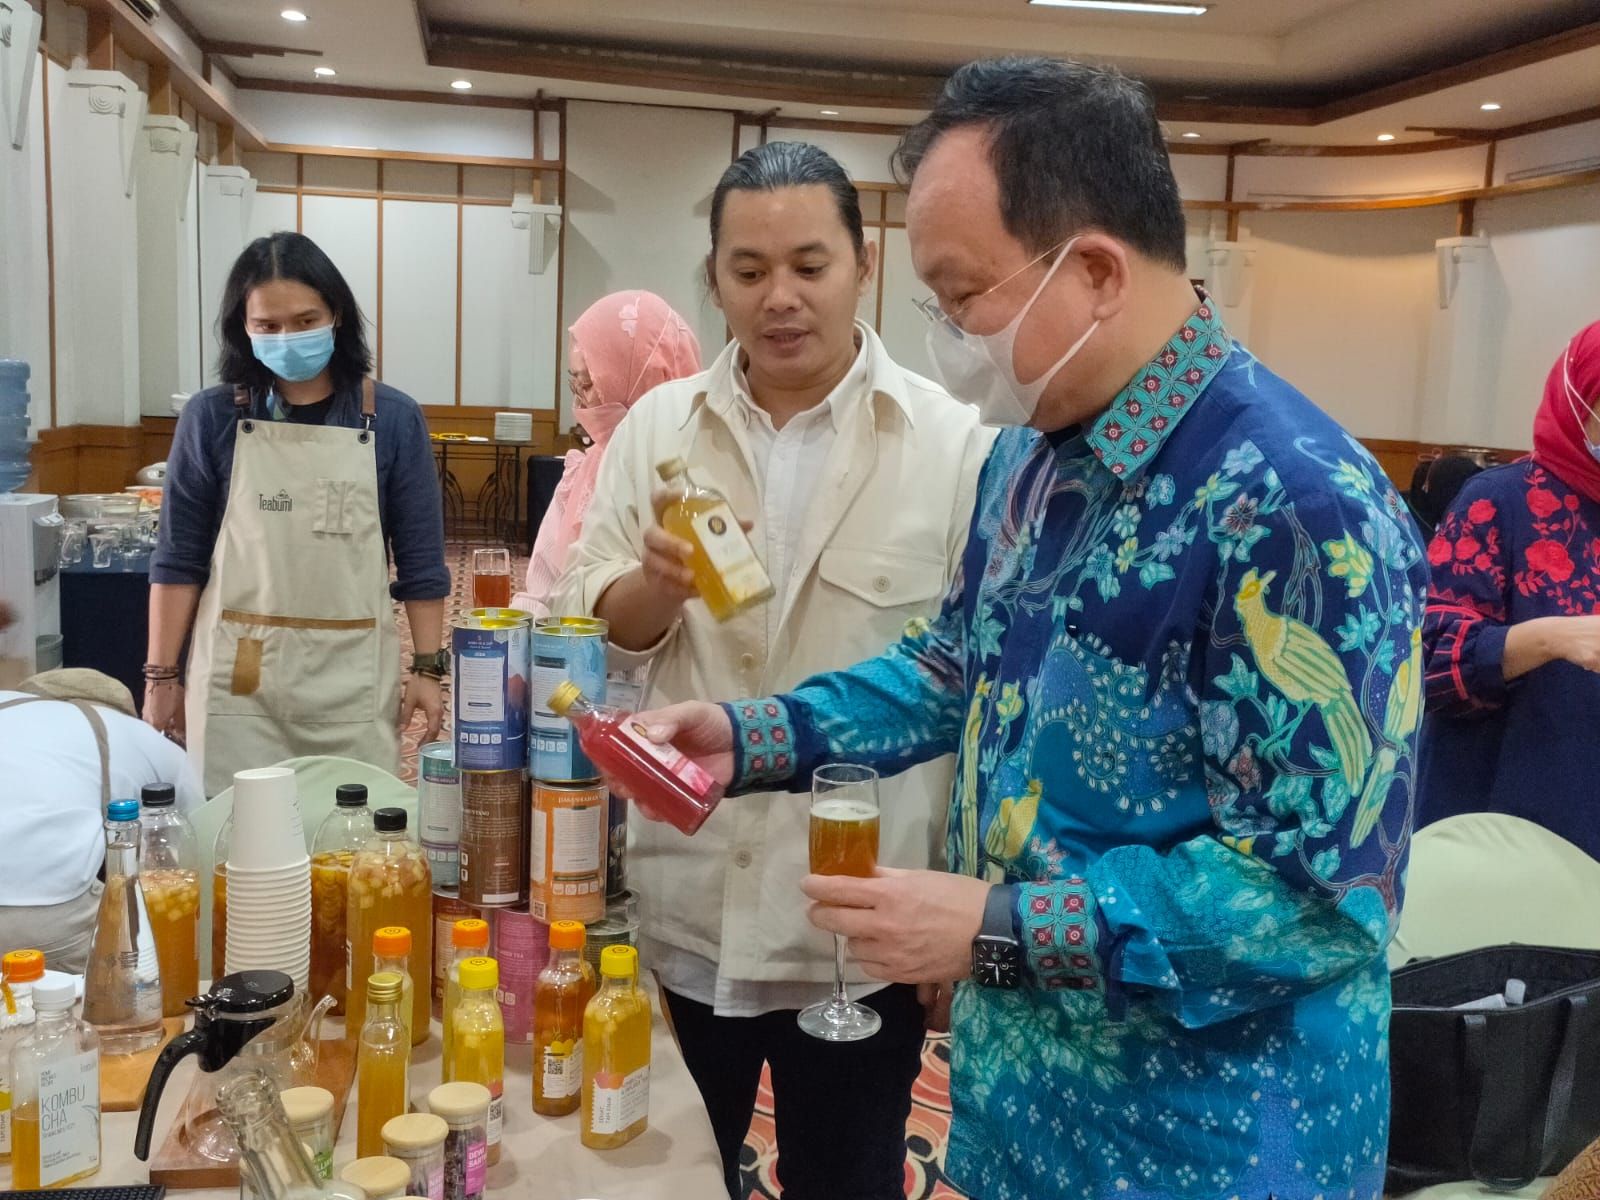 Bandung West Java Food dan Beverage Expo 2022 segera digelar. Adapun acara tersebut akan digelar tanggal 27 Juni hingga 30 Juni 2022 di Sudirman Grand Ballroom, Bandung, Jawa Barat.